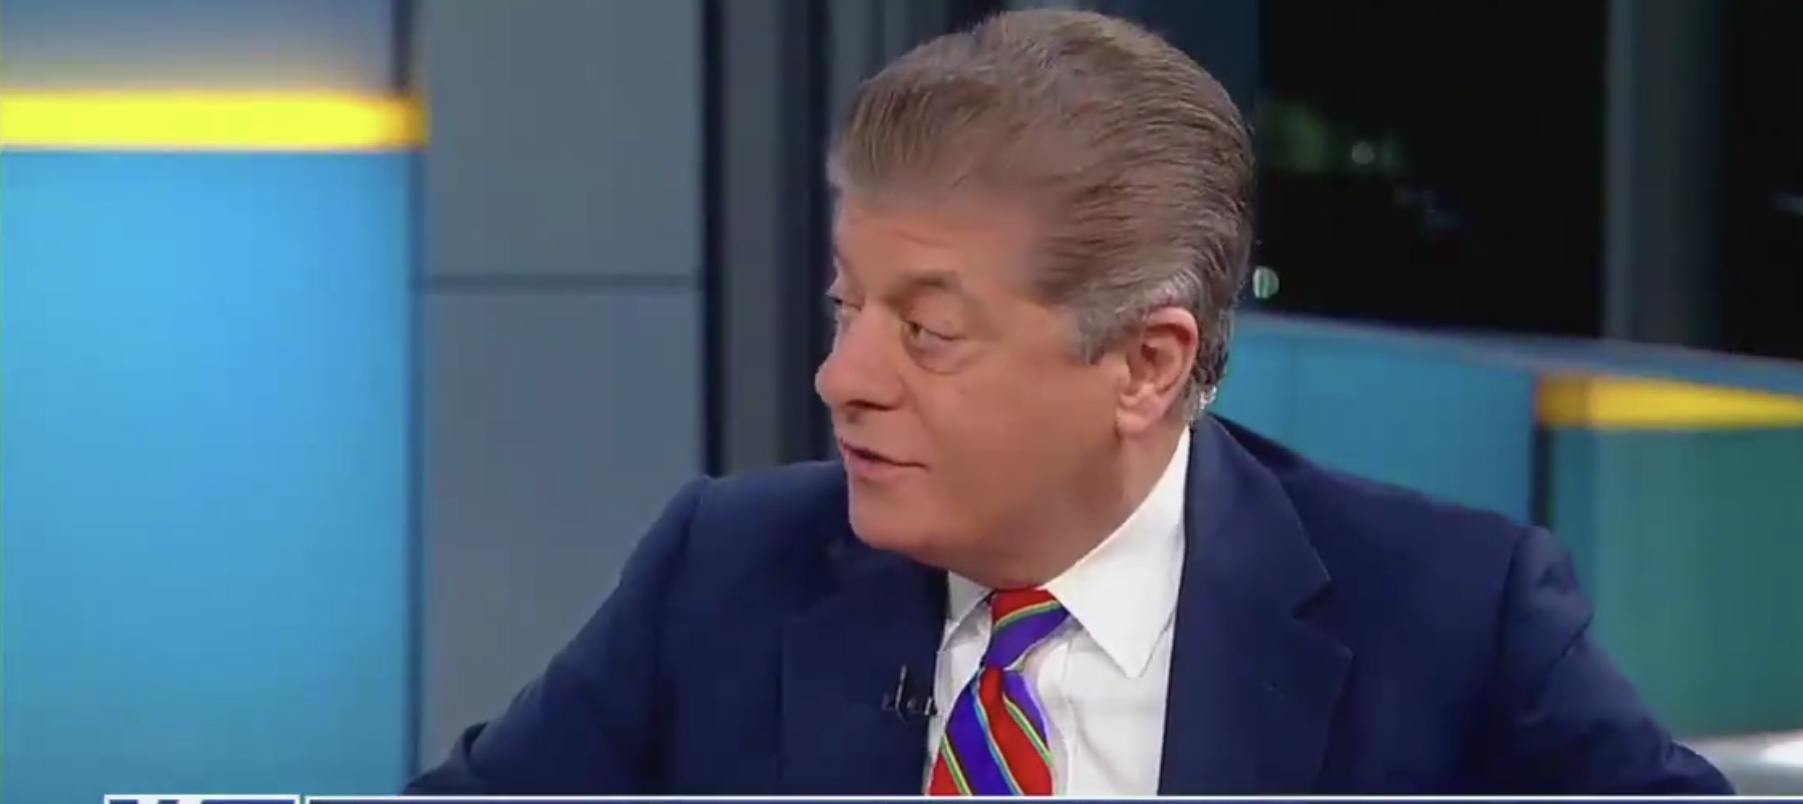 Judge Andrew Napolitano on “Fox & Friends,” Oct. 24, 2019. Fox News screenshot